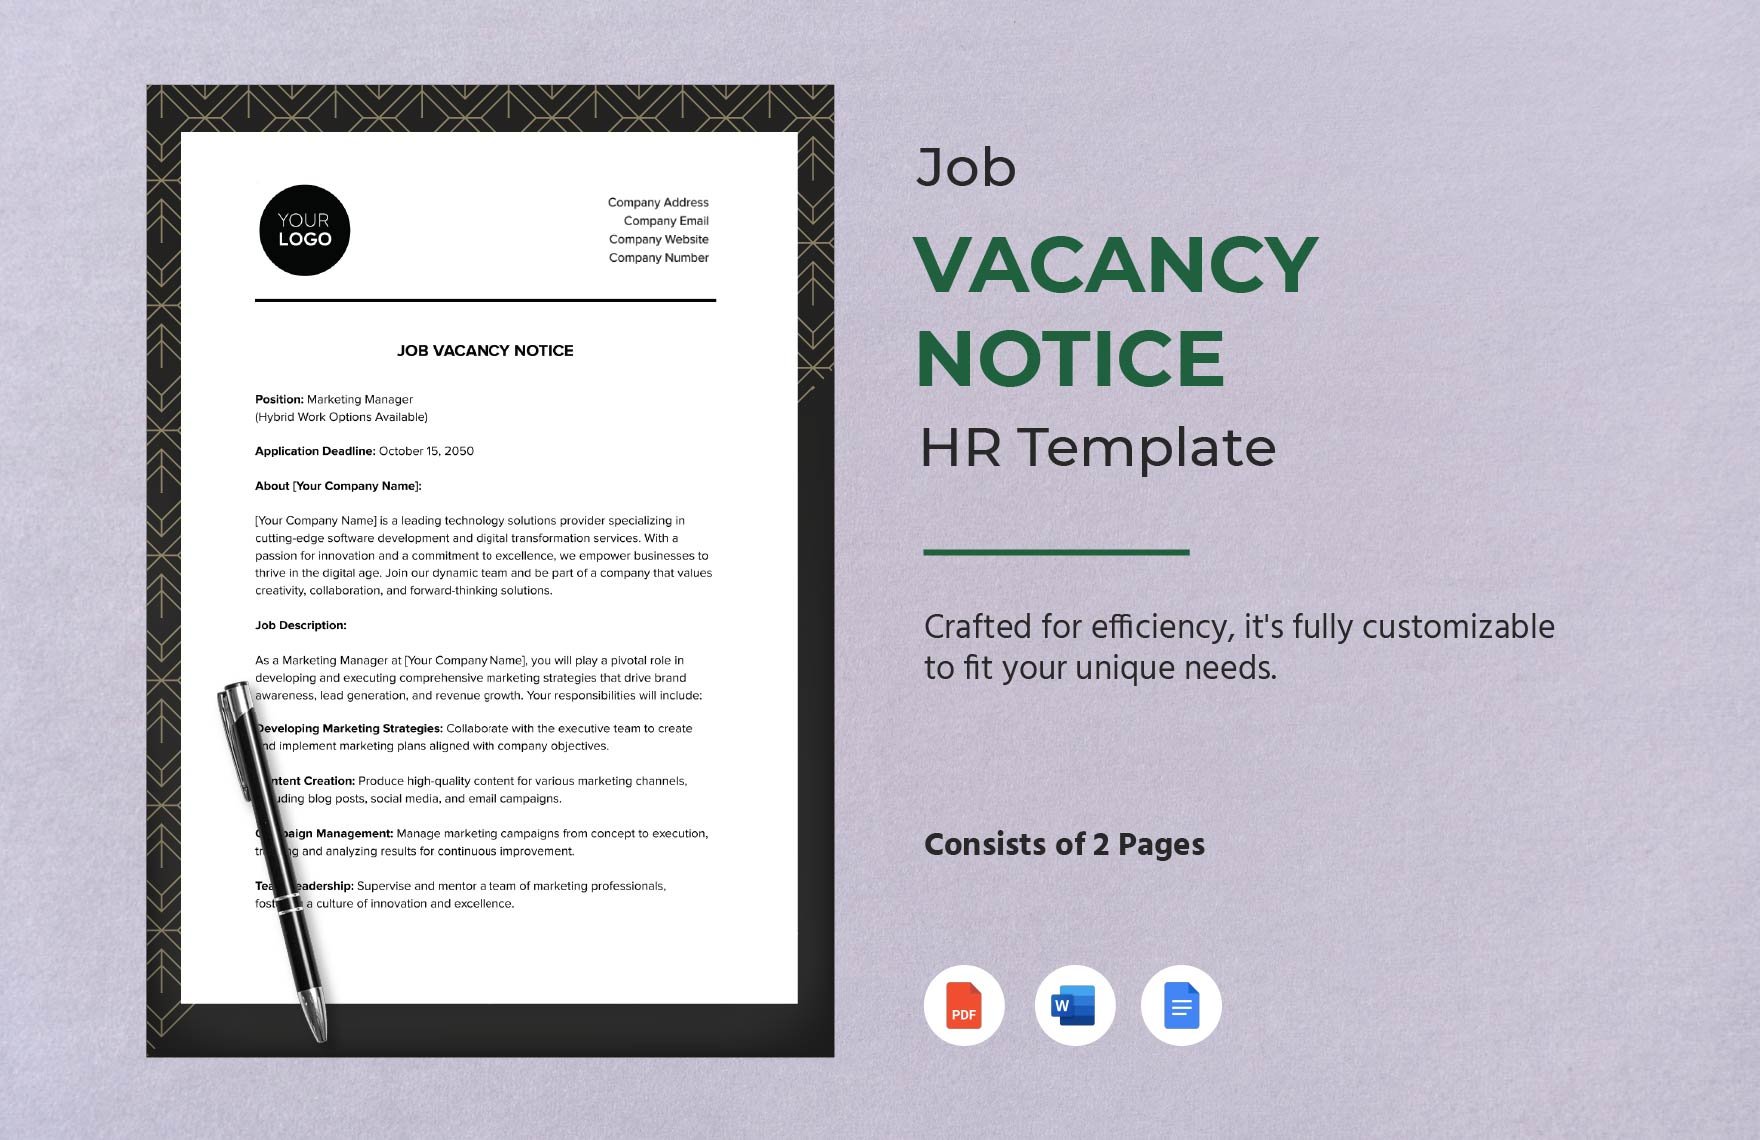 Job Vacancy Notice HR Template